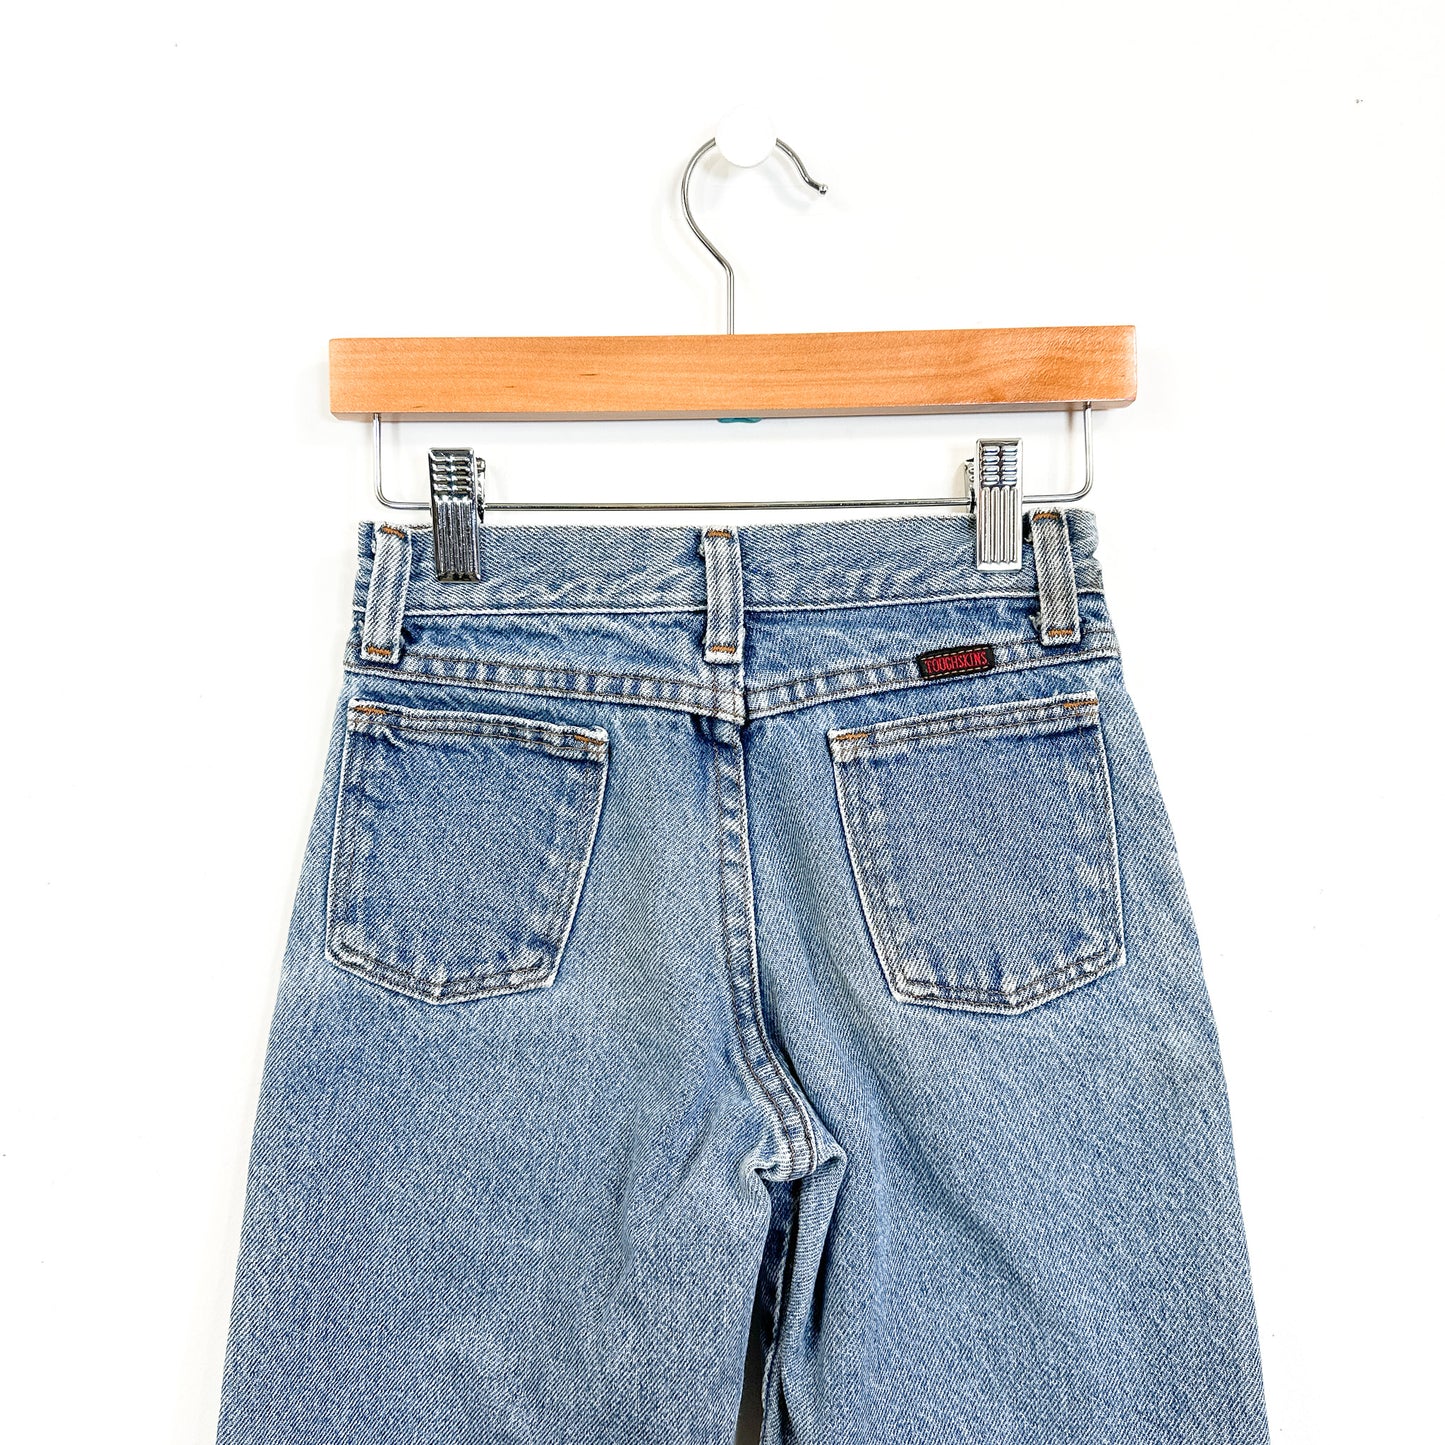 90's Toughskins Jeans - Size 7